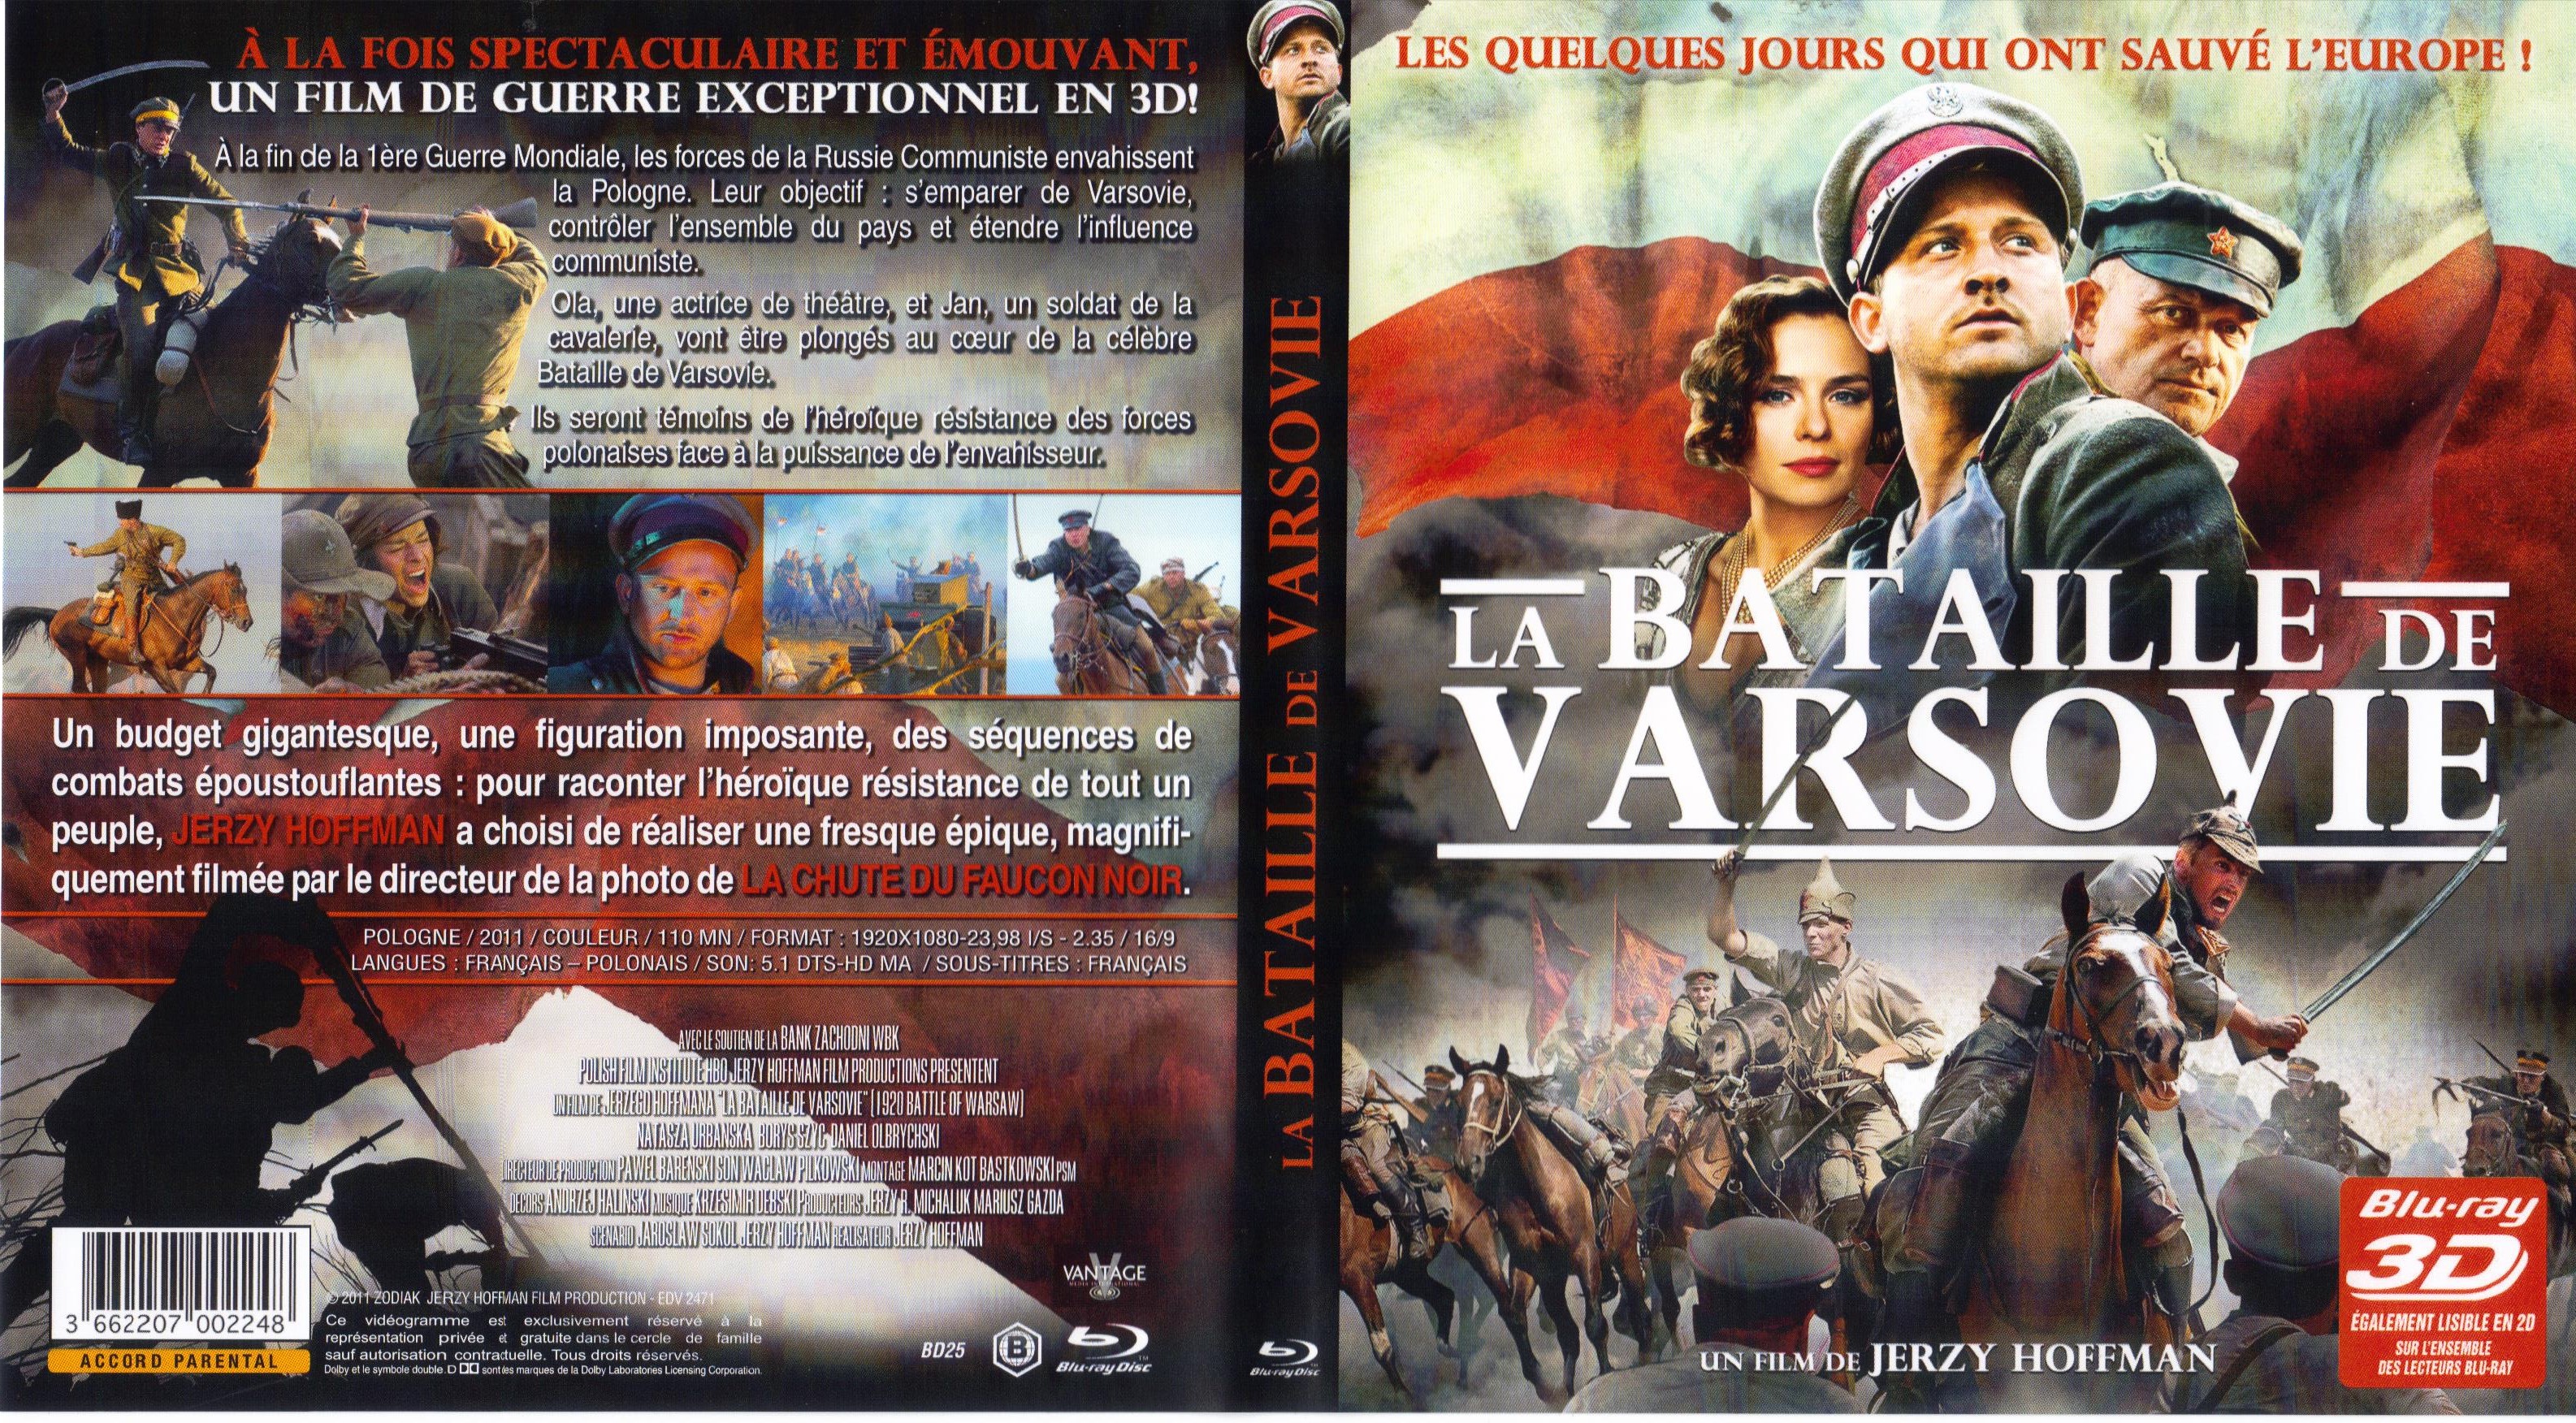 Jaquette DVD La Bataille de Varsovie (BLU-RAY)